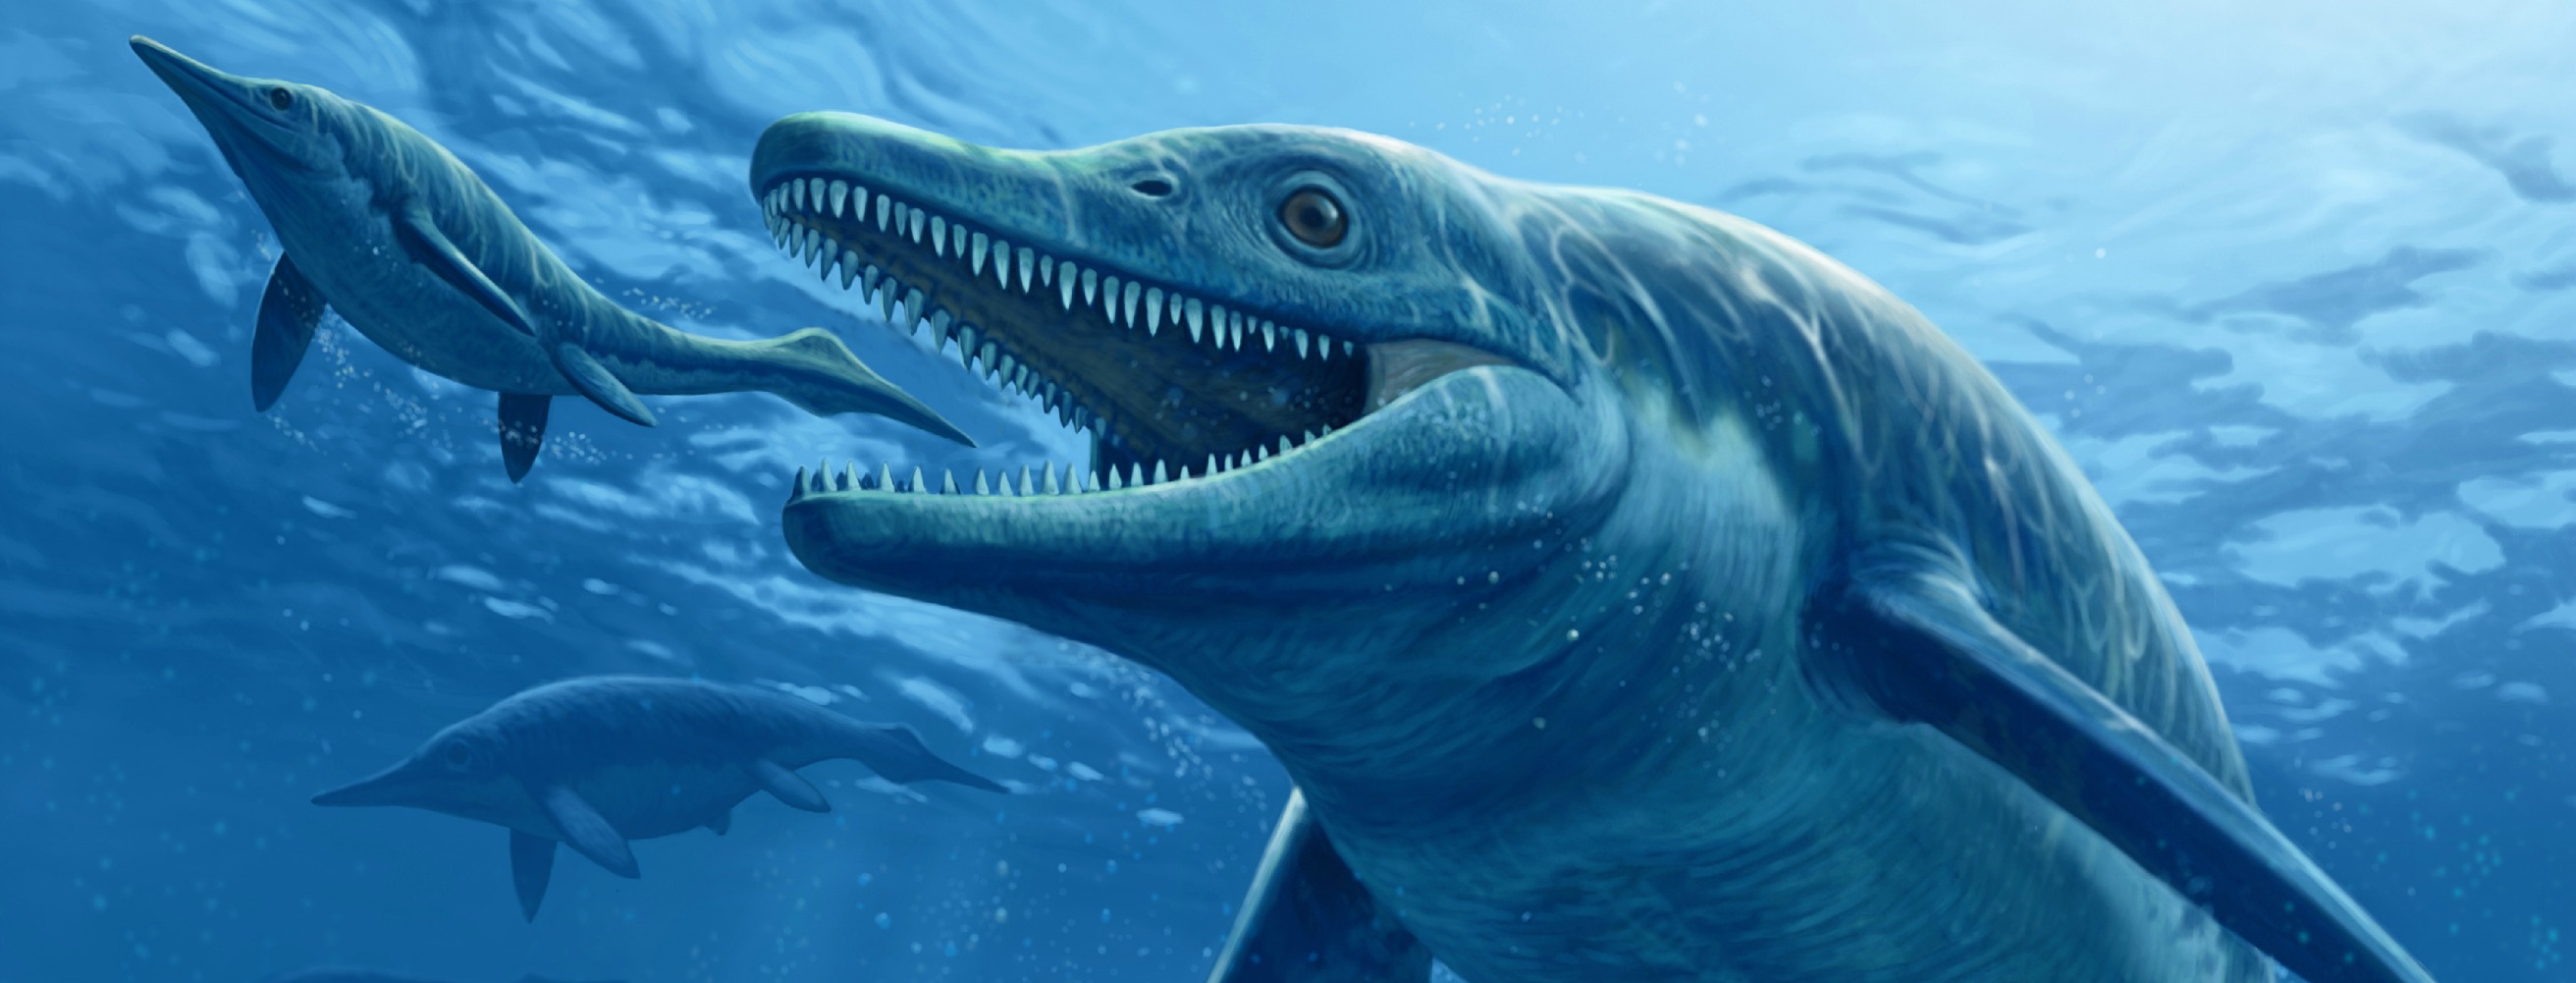 Cool Ichthyosaur